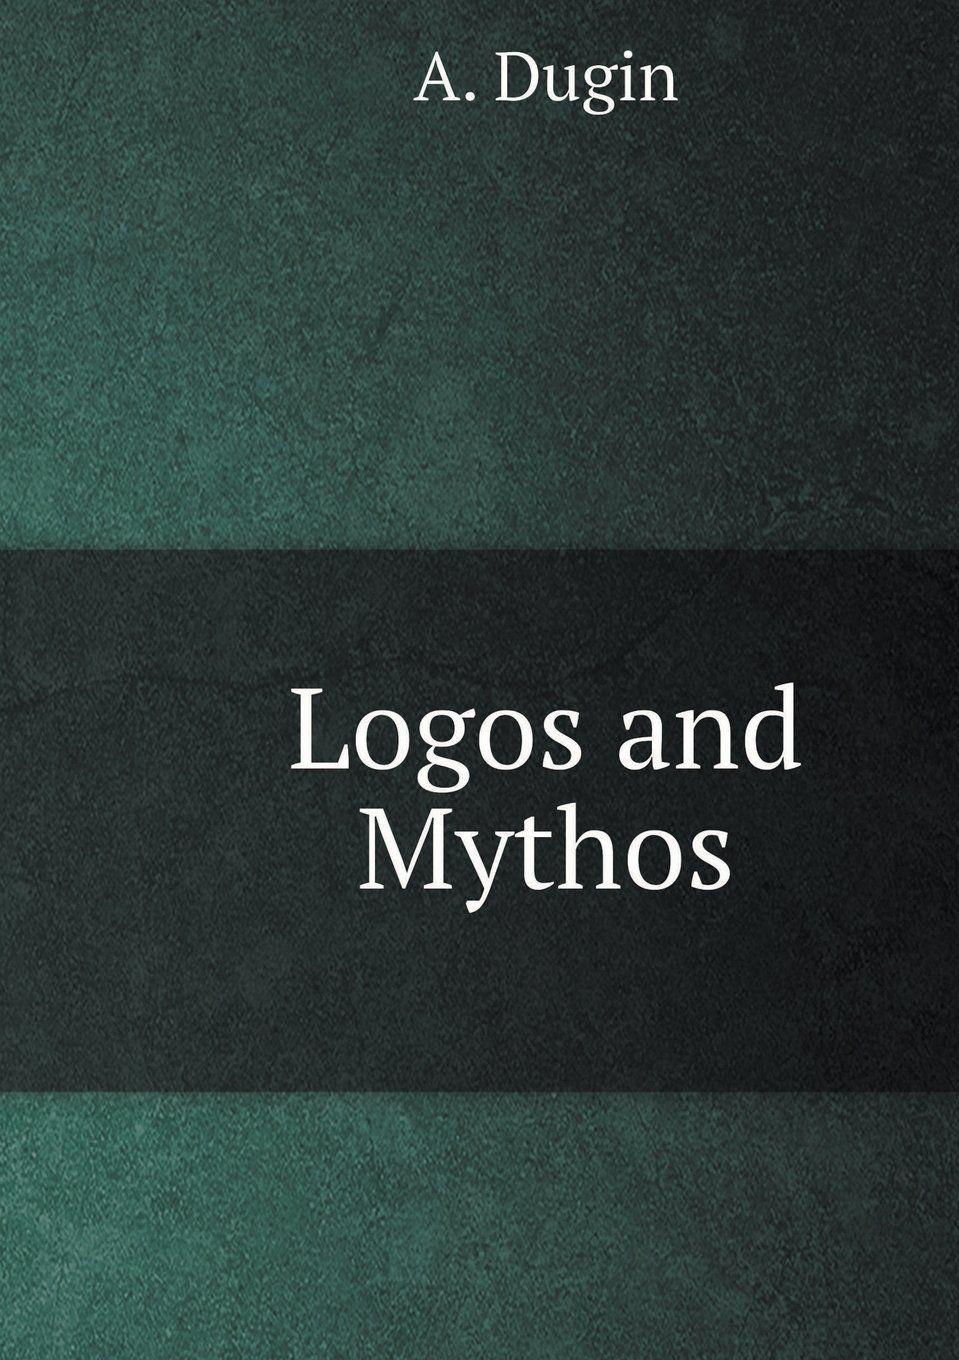 Mythos Logo - Logos and mythos (Russian Edition): A. Dugin: 9785519525817: Amazon ...